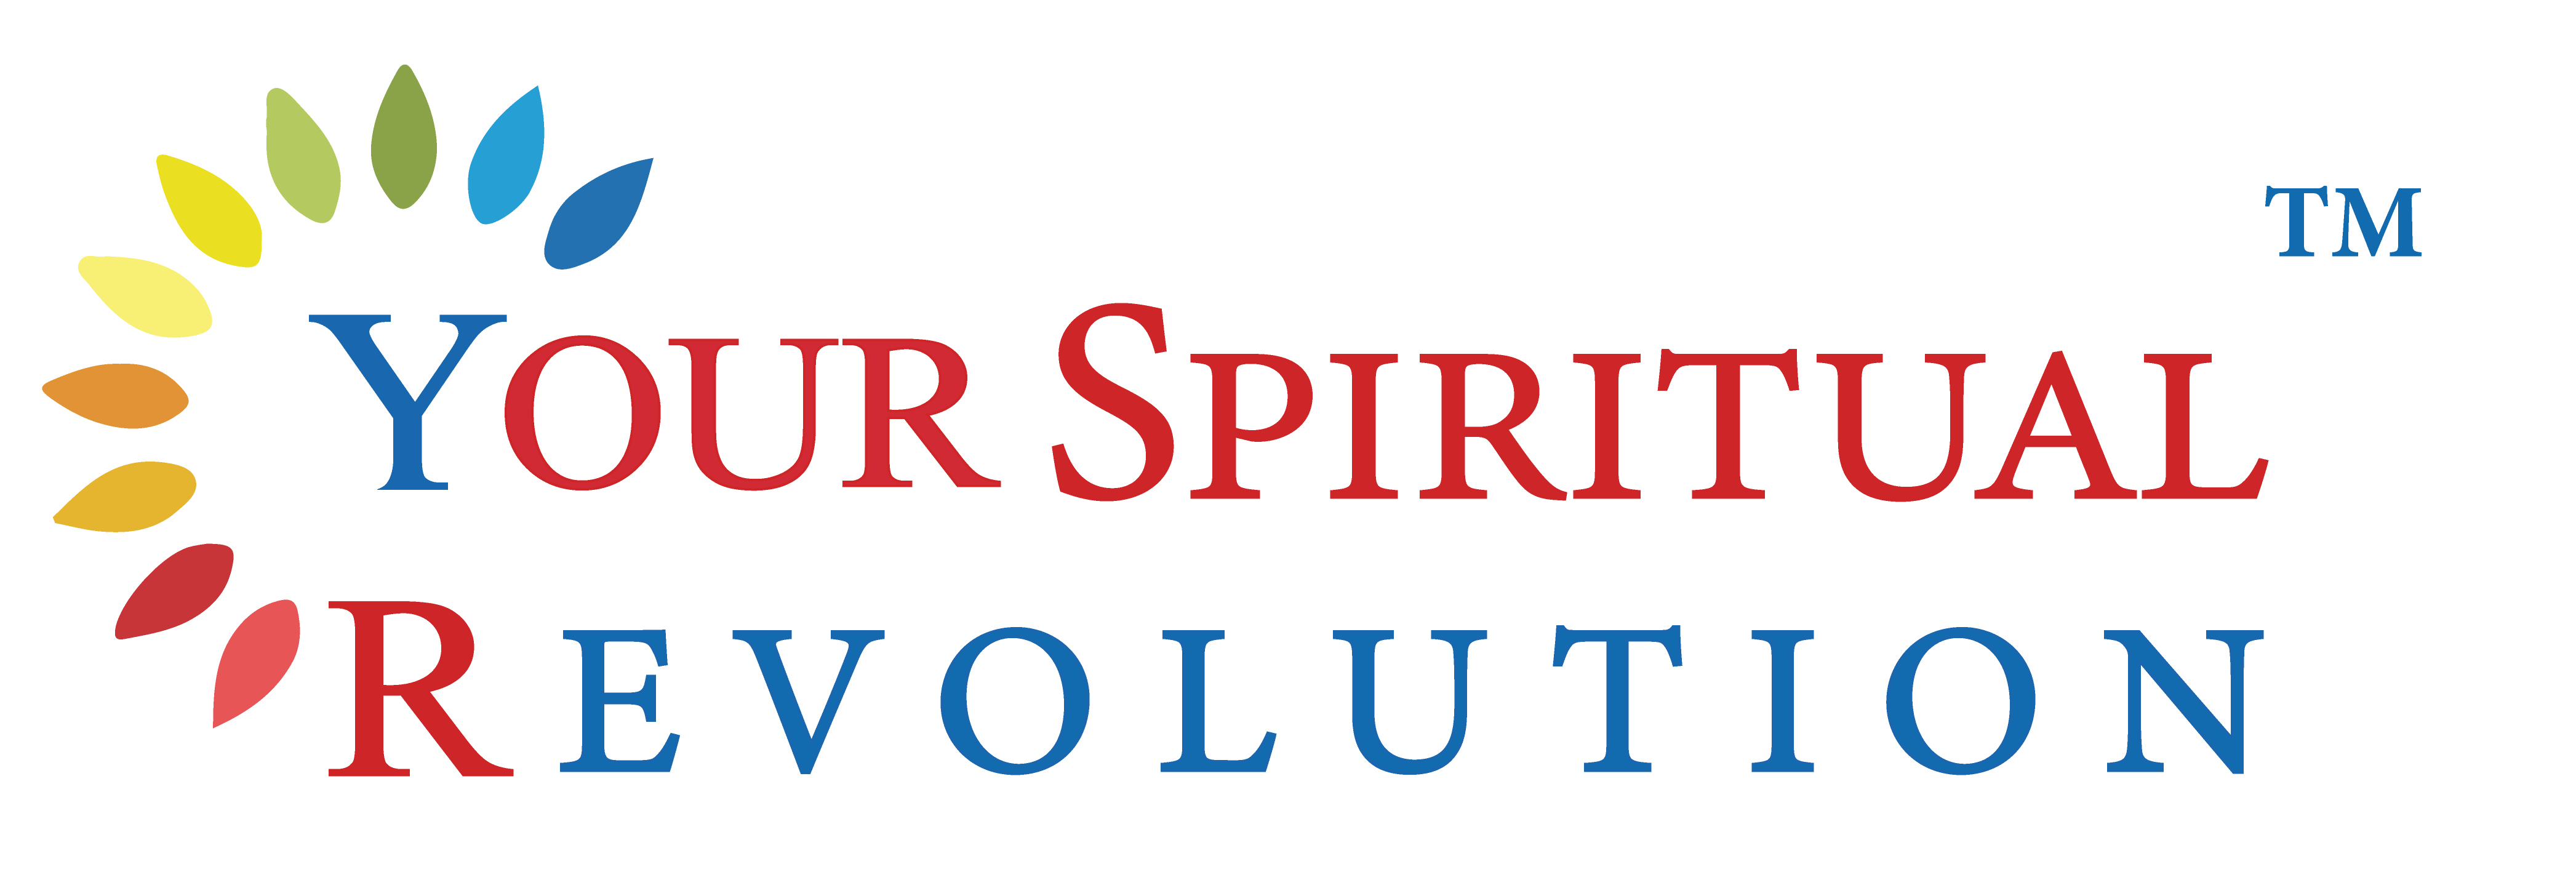 Your Spiritual Revolution LLP logo